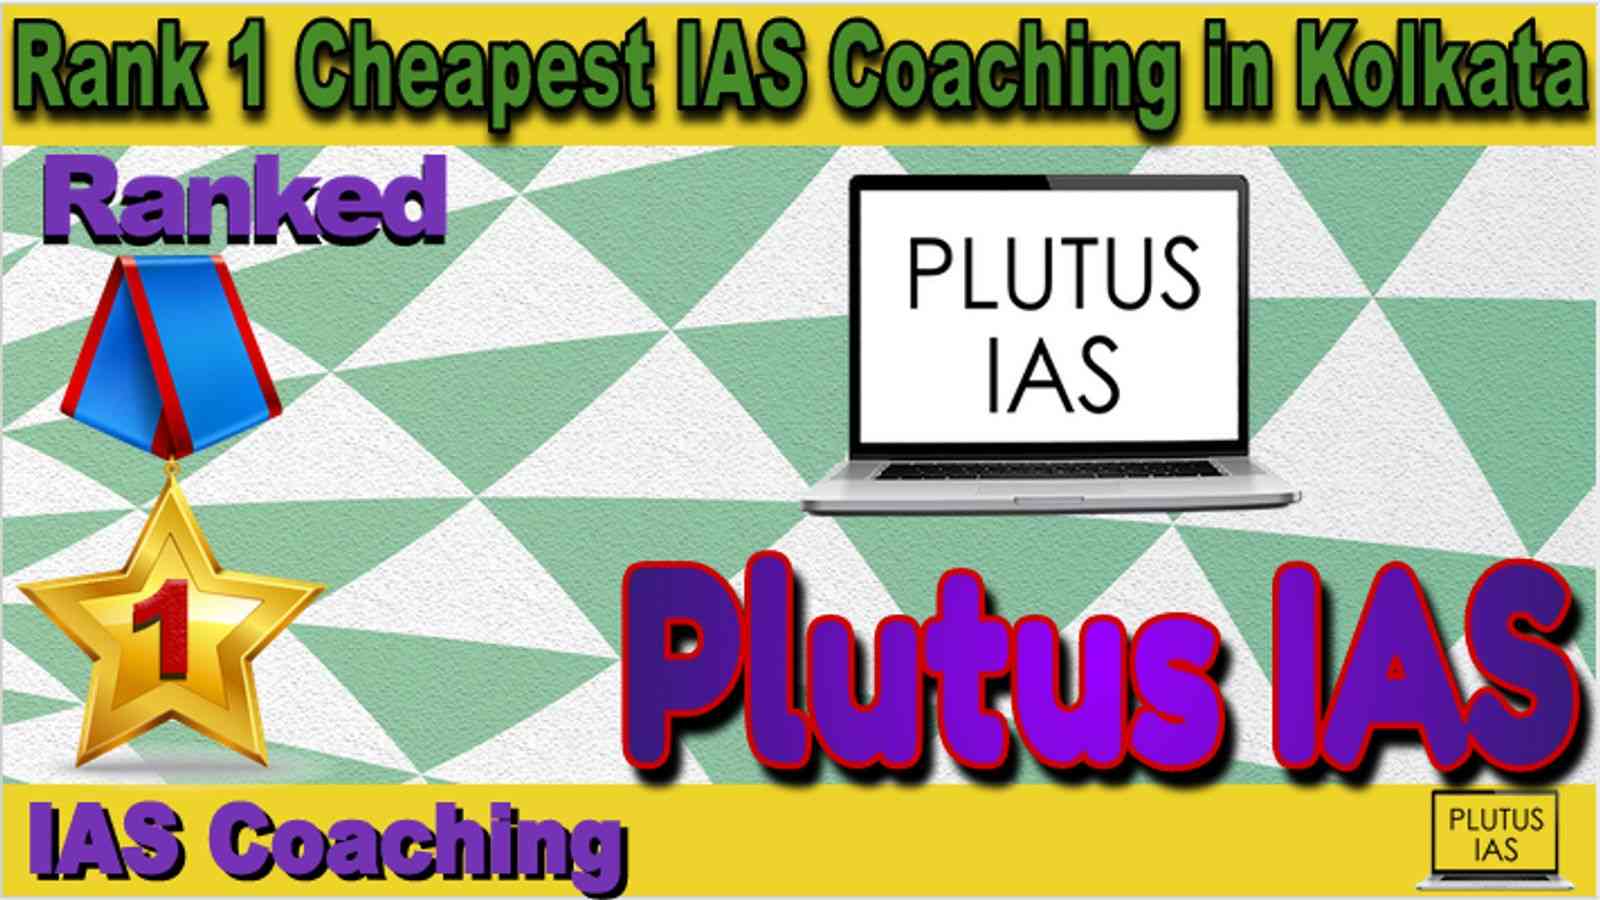 Rank 1 Cheapest IAS Coaching in Kolkata